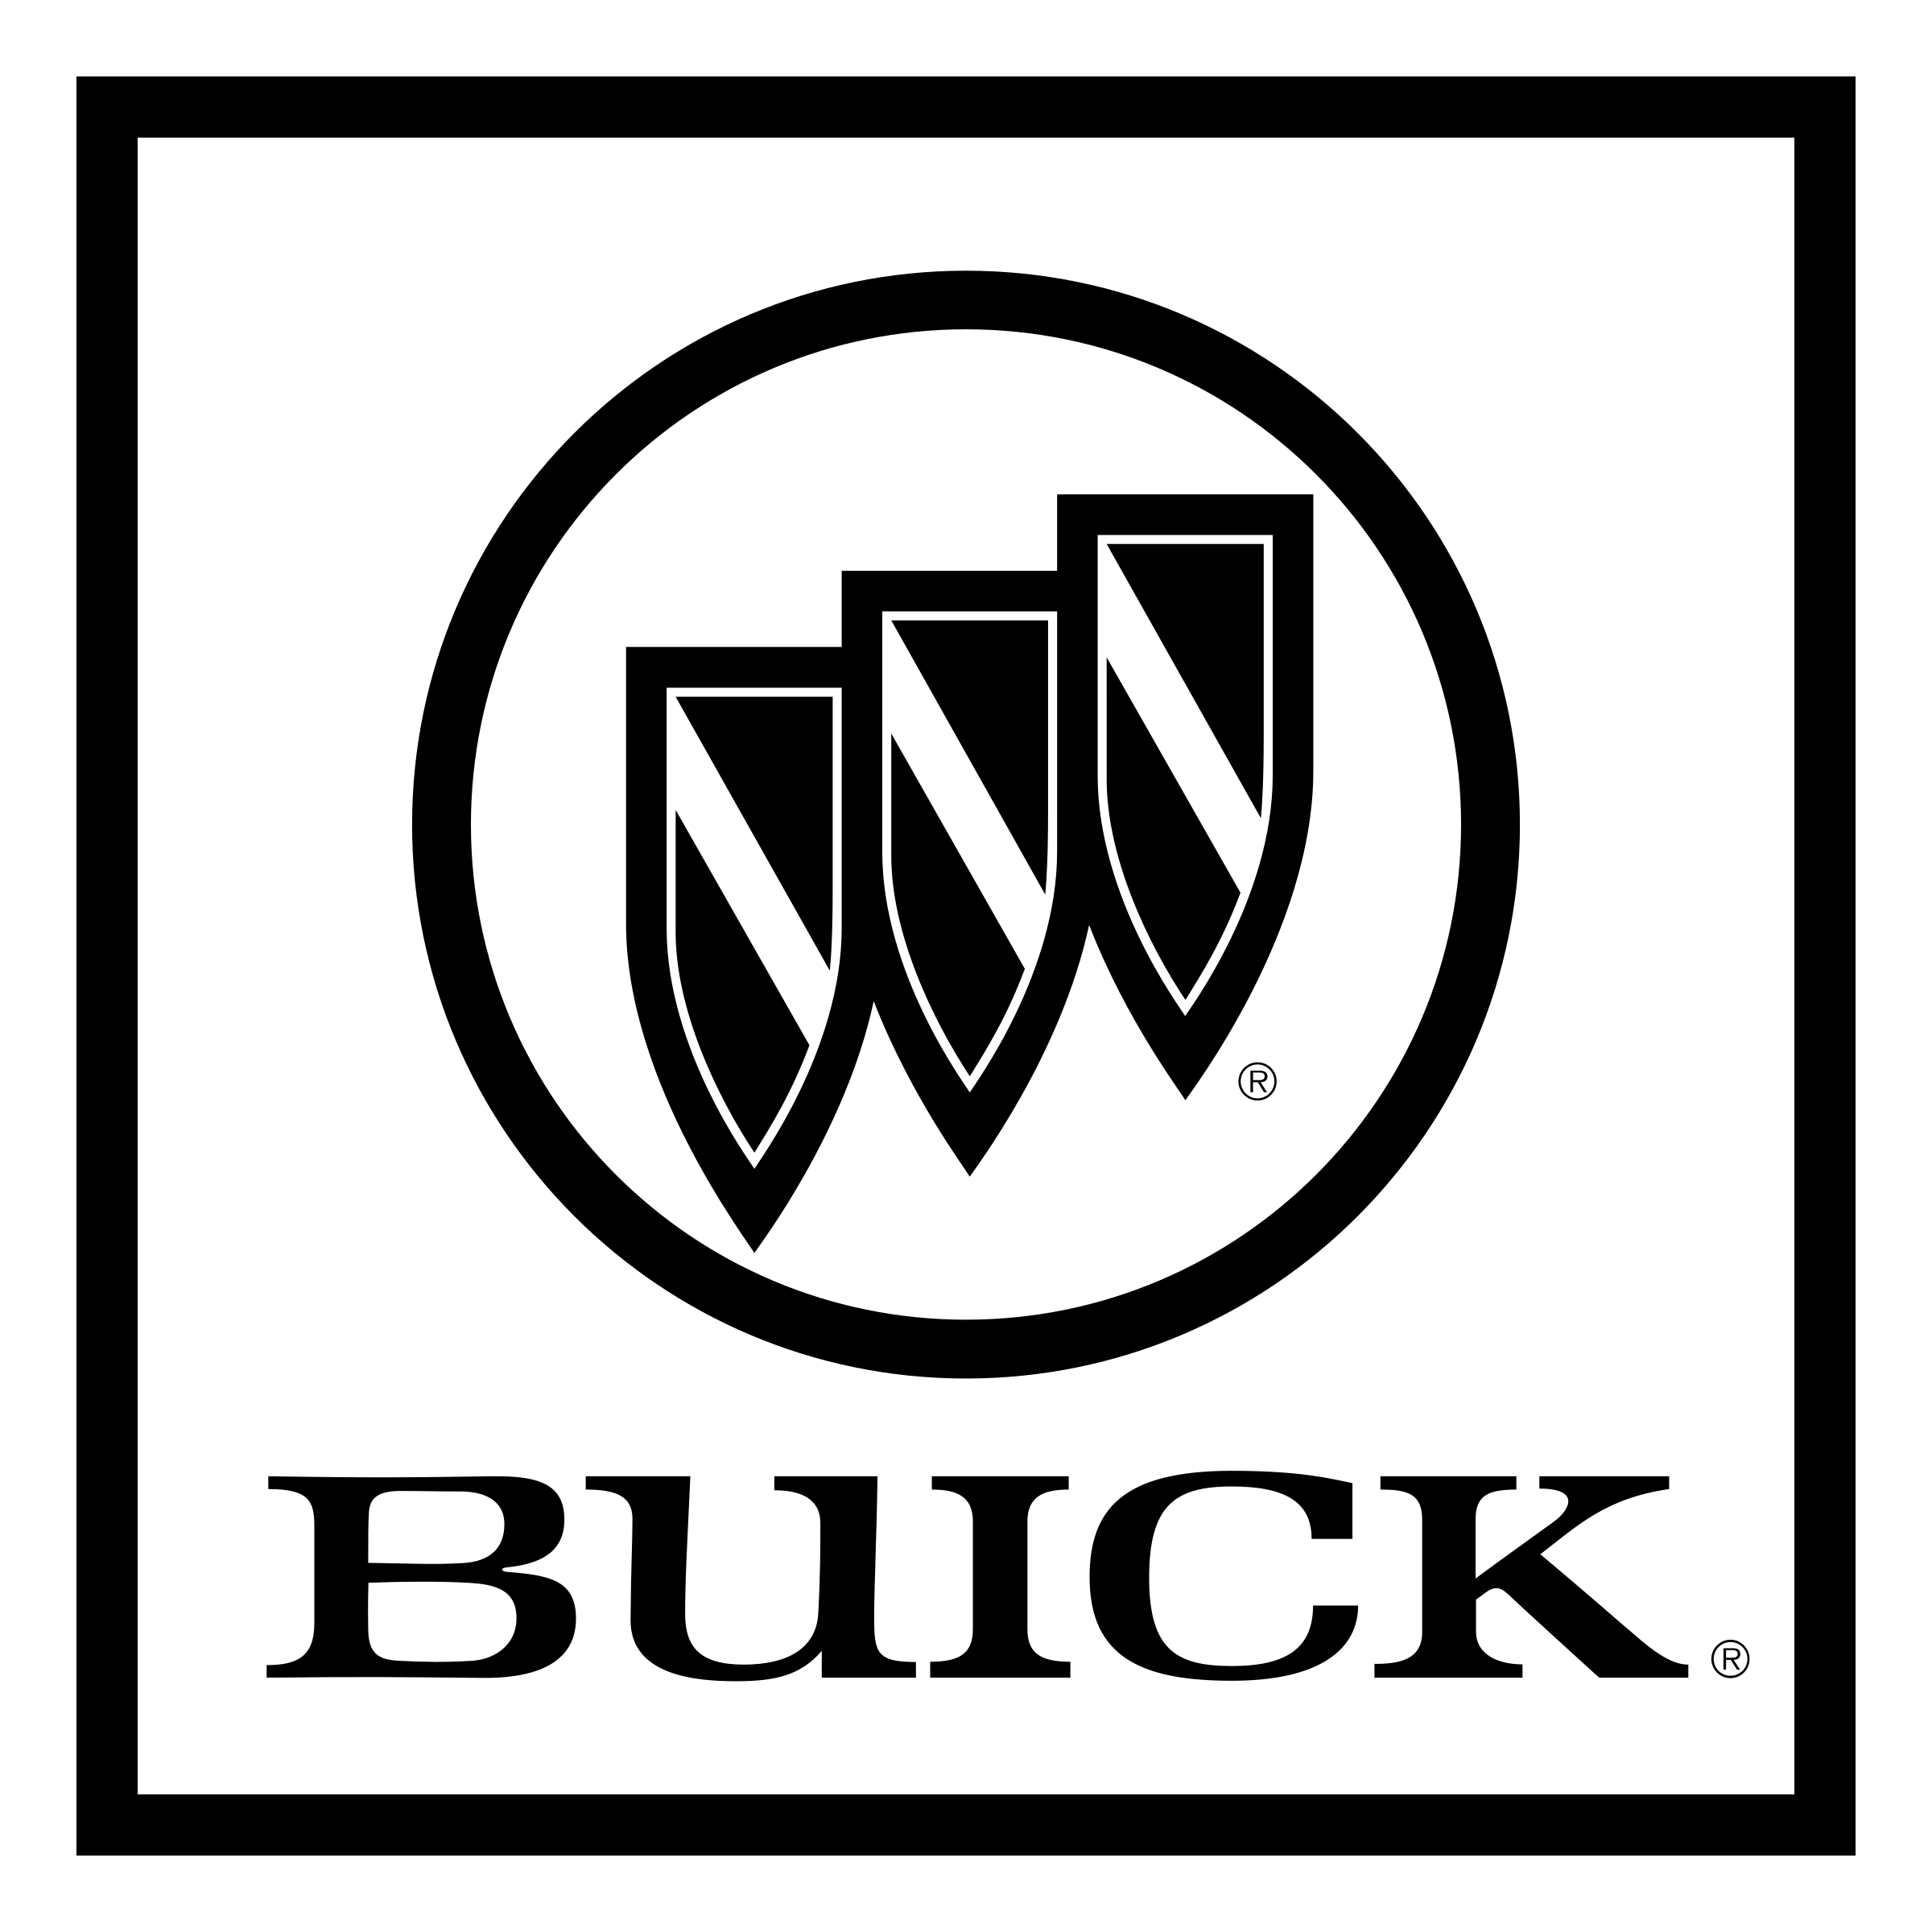 Buick Logo - Buick Logo PNG Transparent & SVG Vector - Freebie Supply